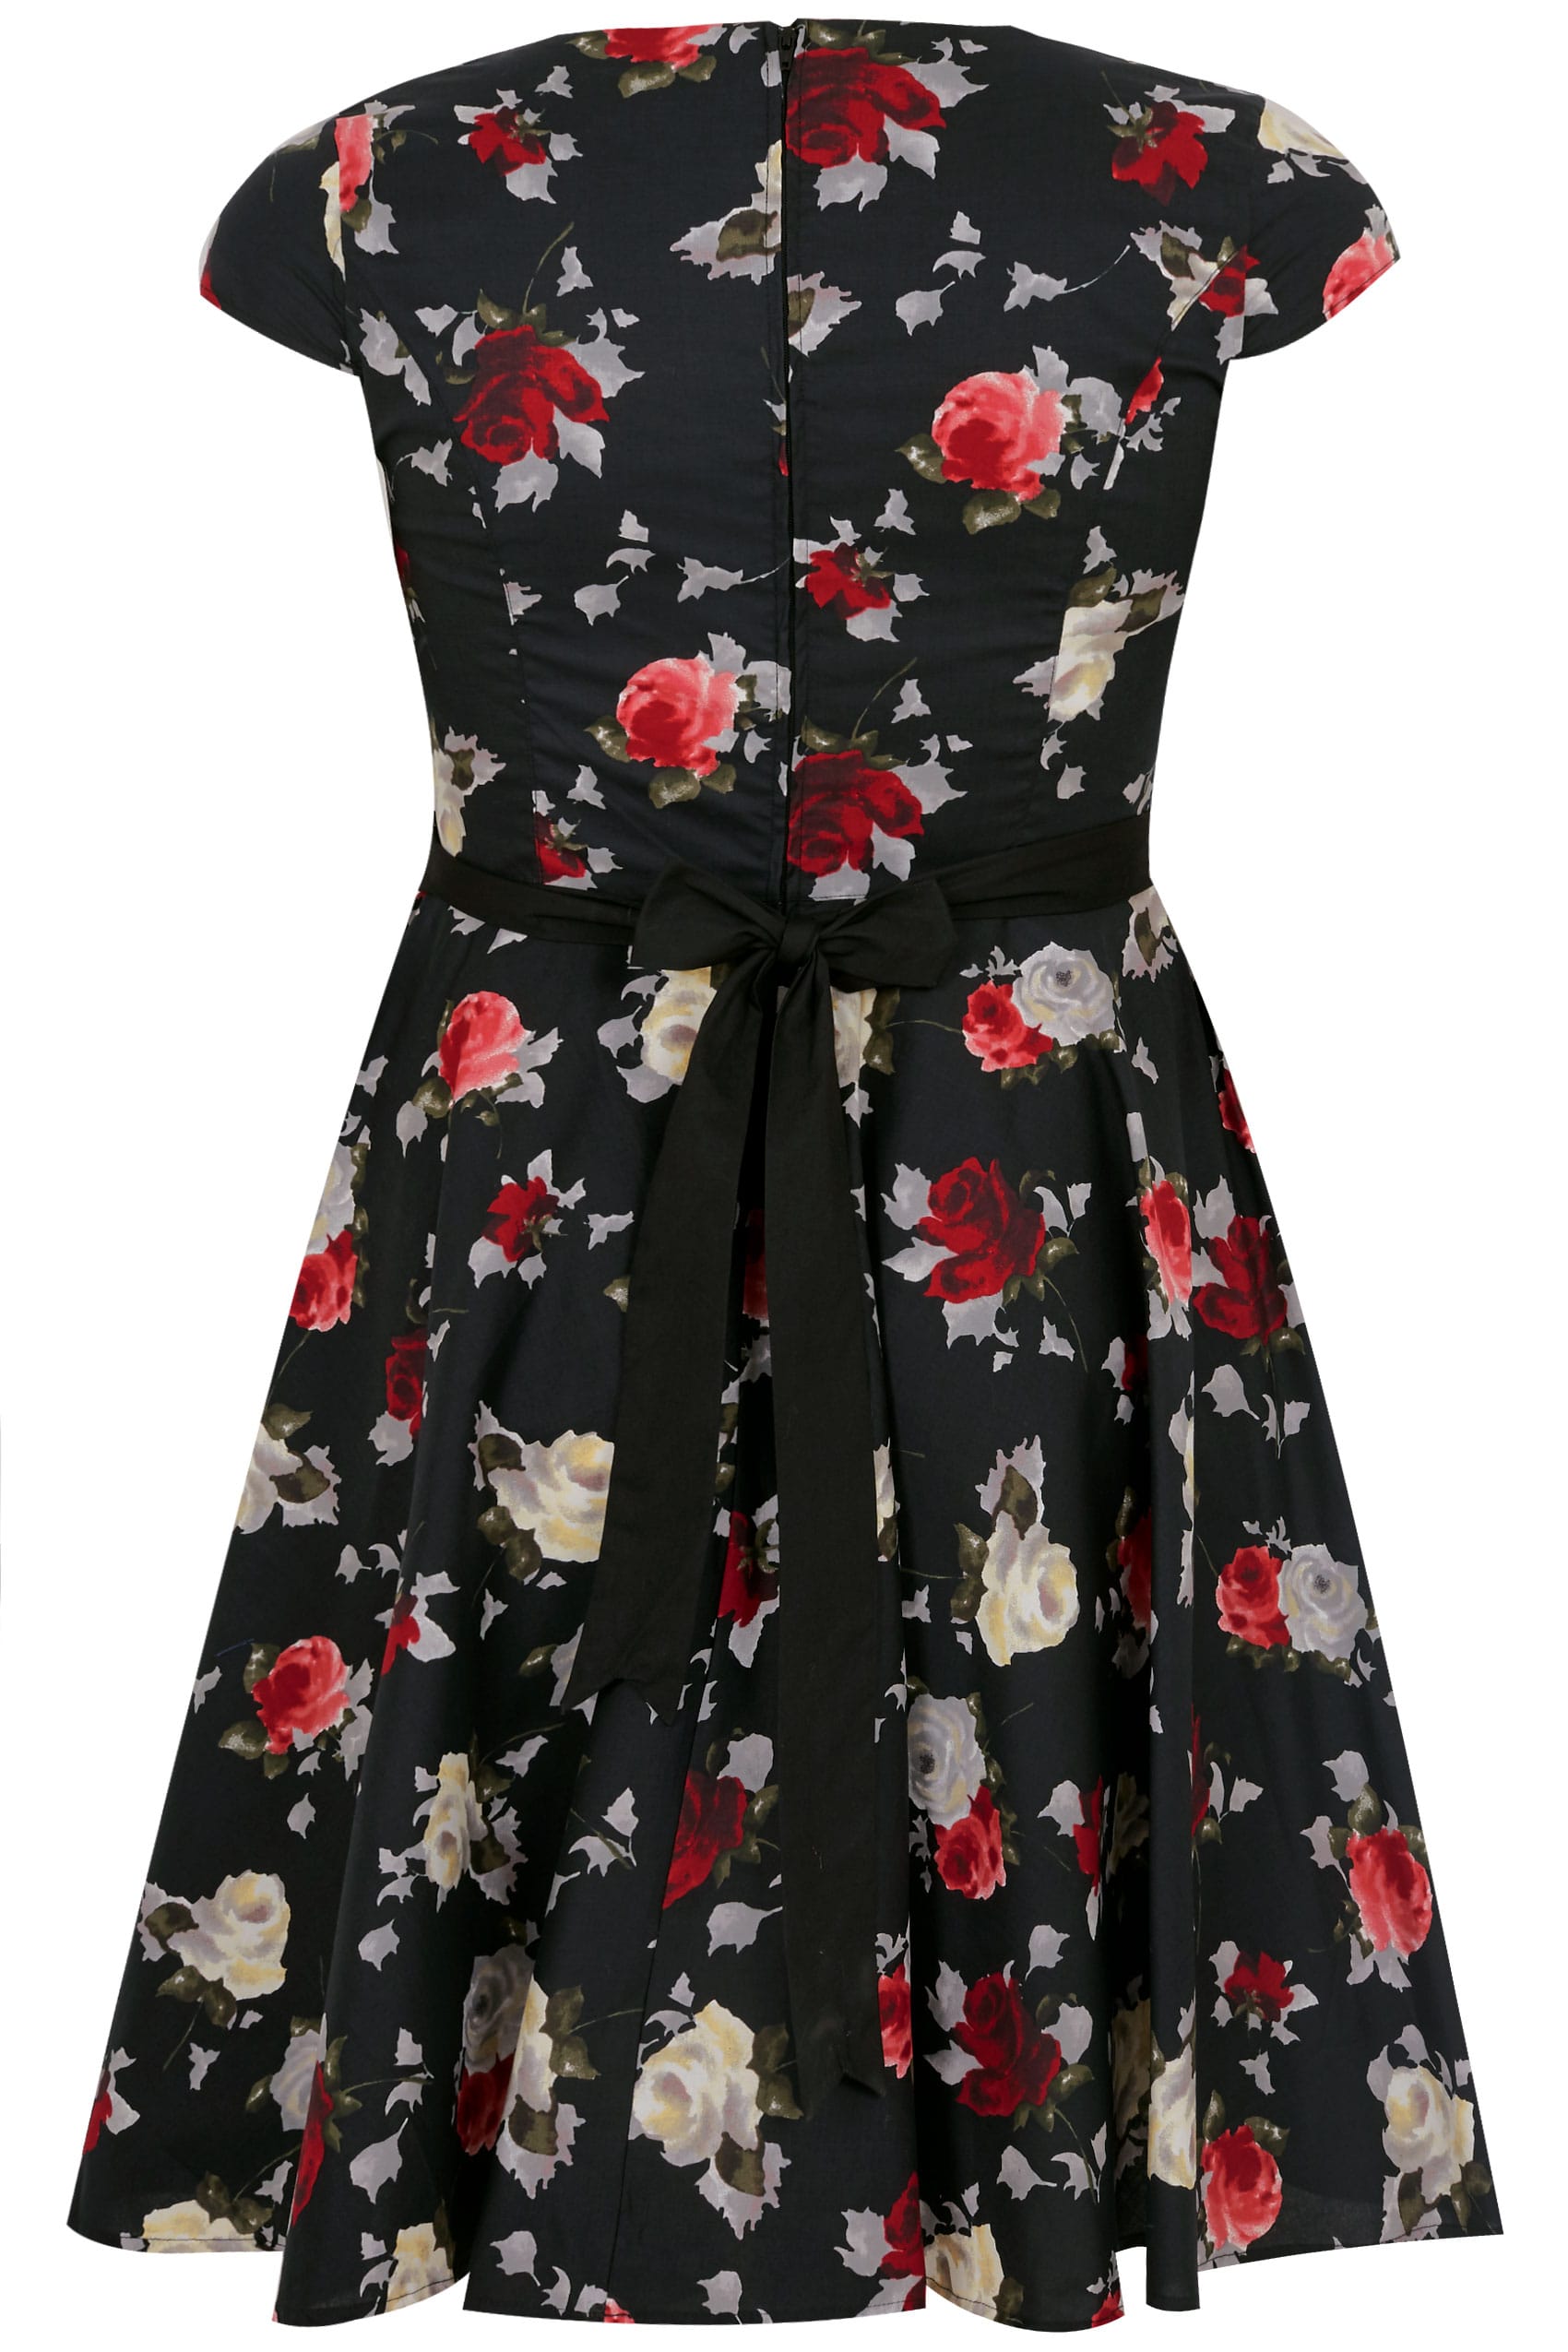 HELL BUNNY Black & Multi Floral Print Arabella Dress, Plus size 16 to 36